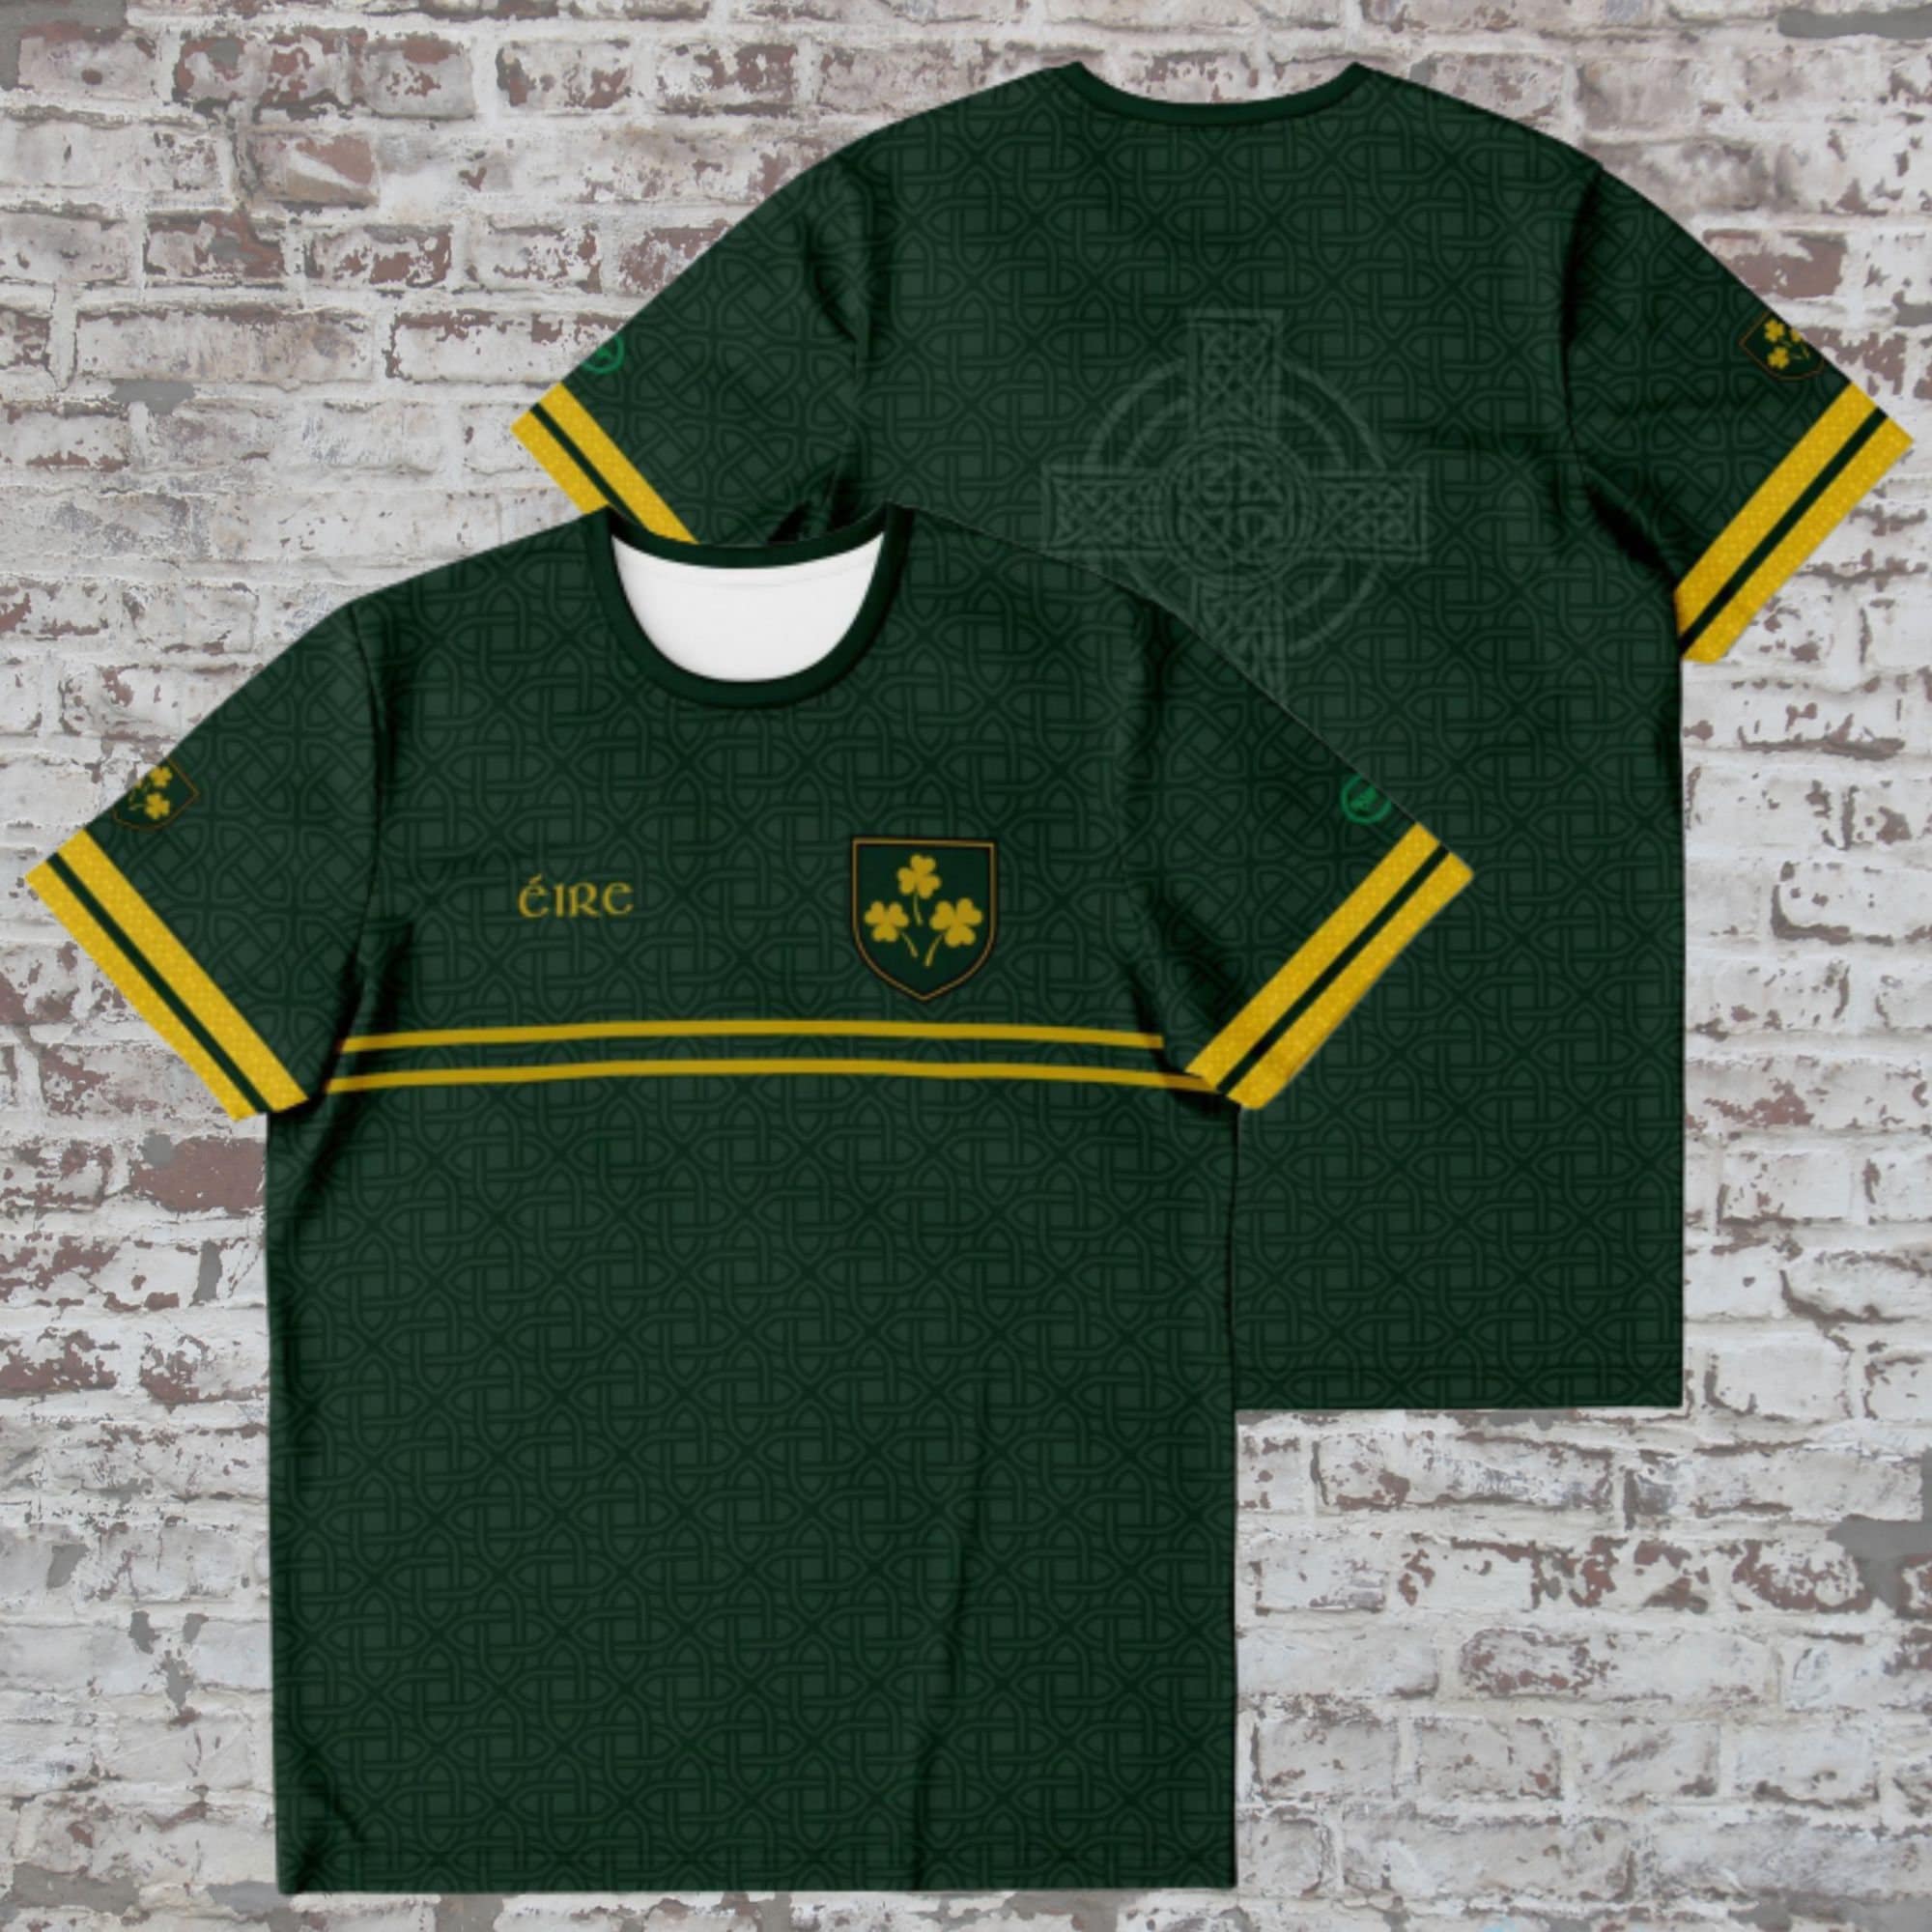 Celtic 09/10 Bumble Bee Kit - Football Shirt Culture - Latest